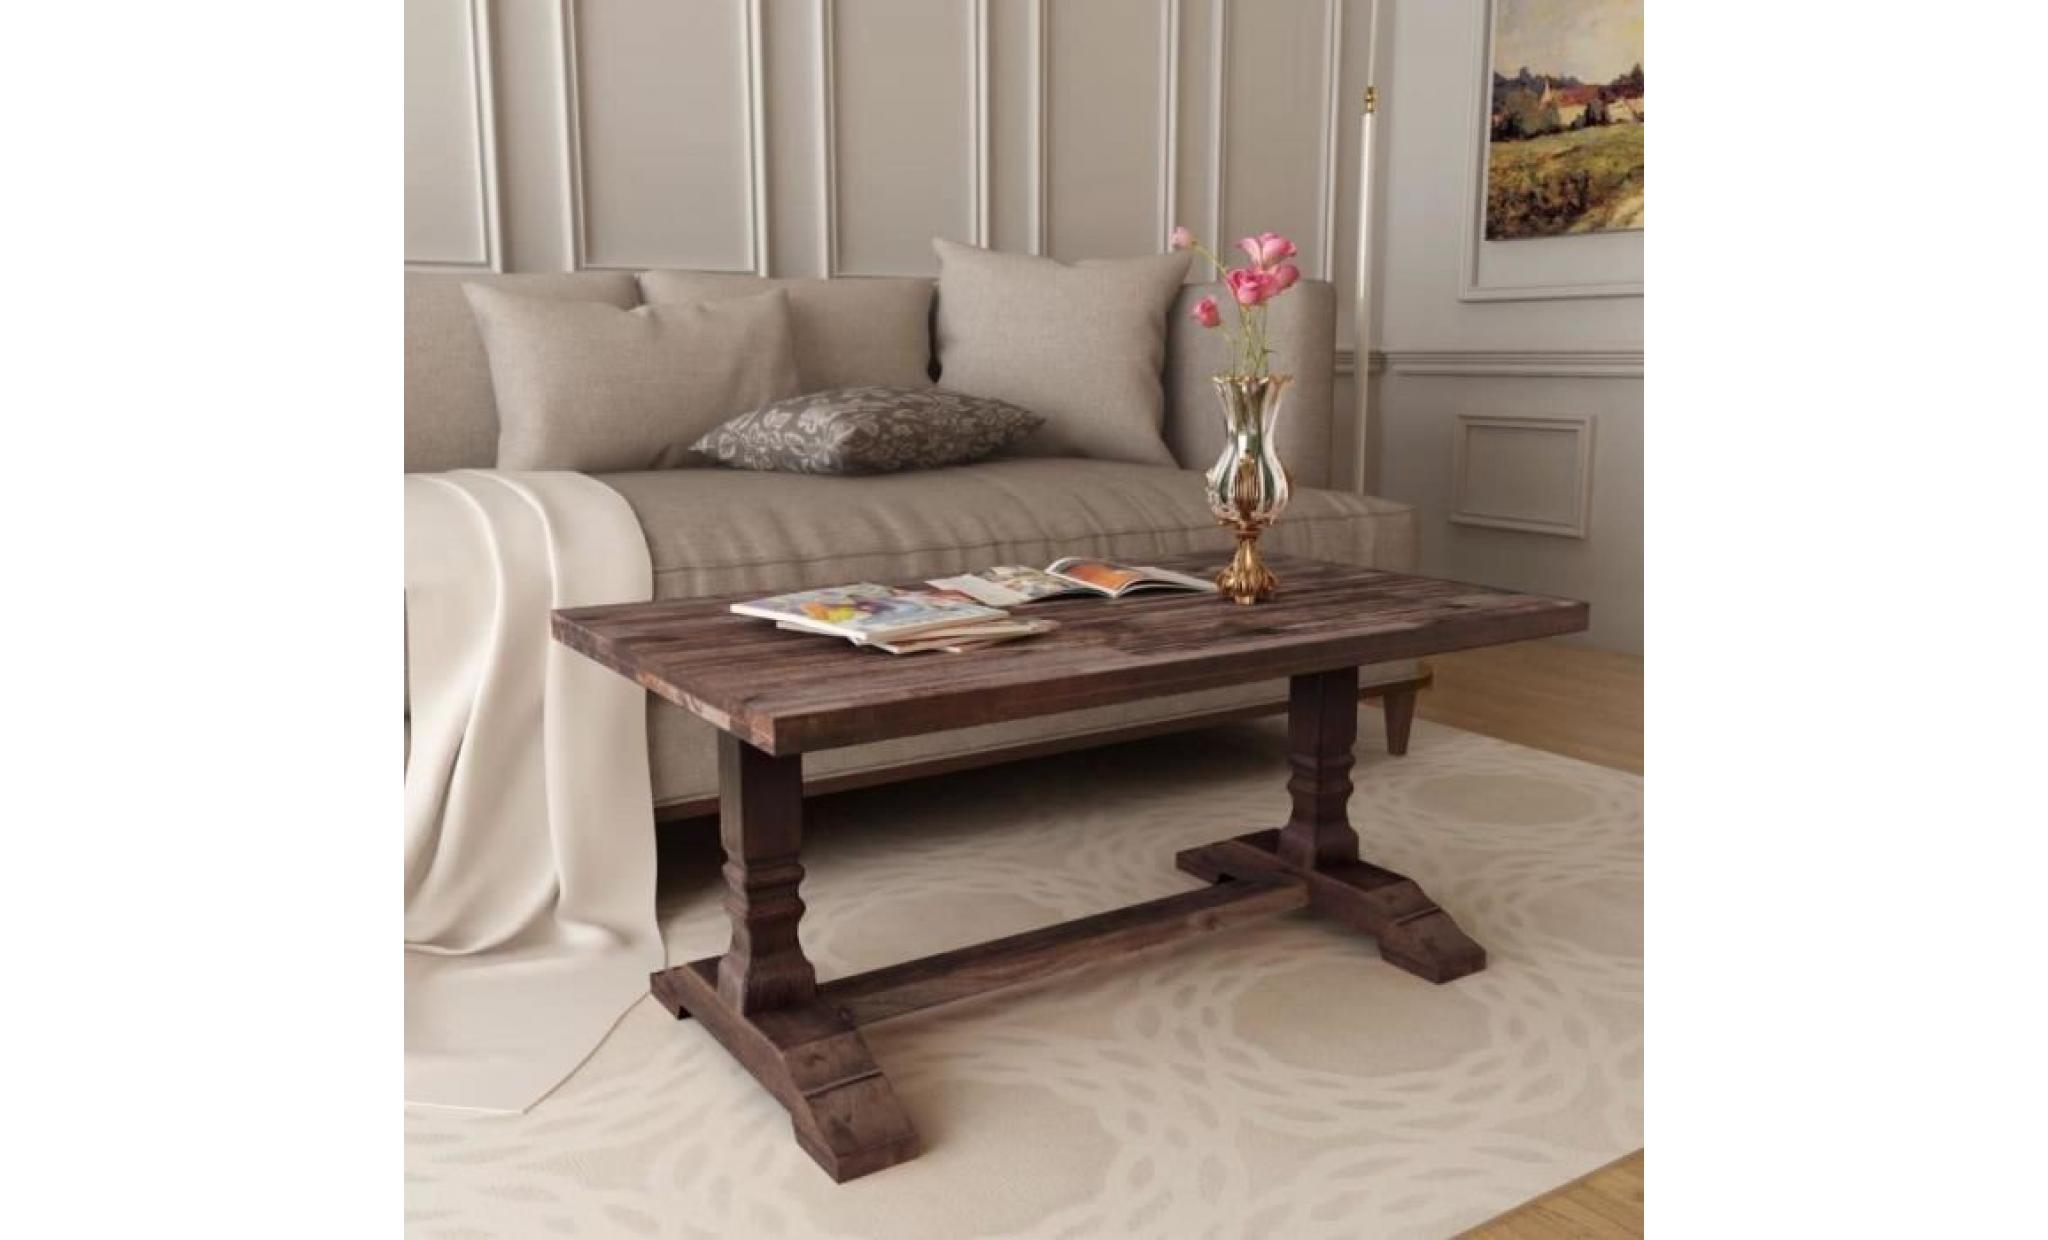 tables basses couleur : marron materiau : bois d'acacia massif brosse dimensions : 100 x 60